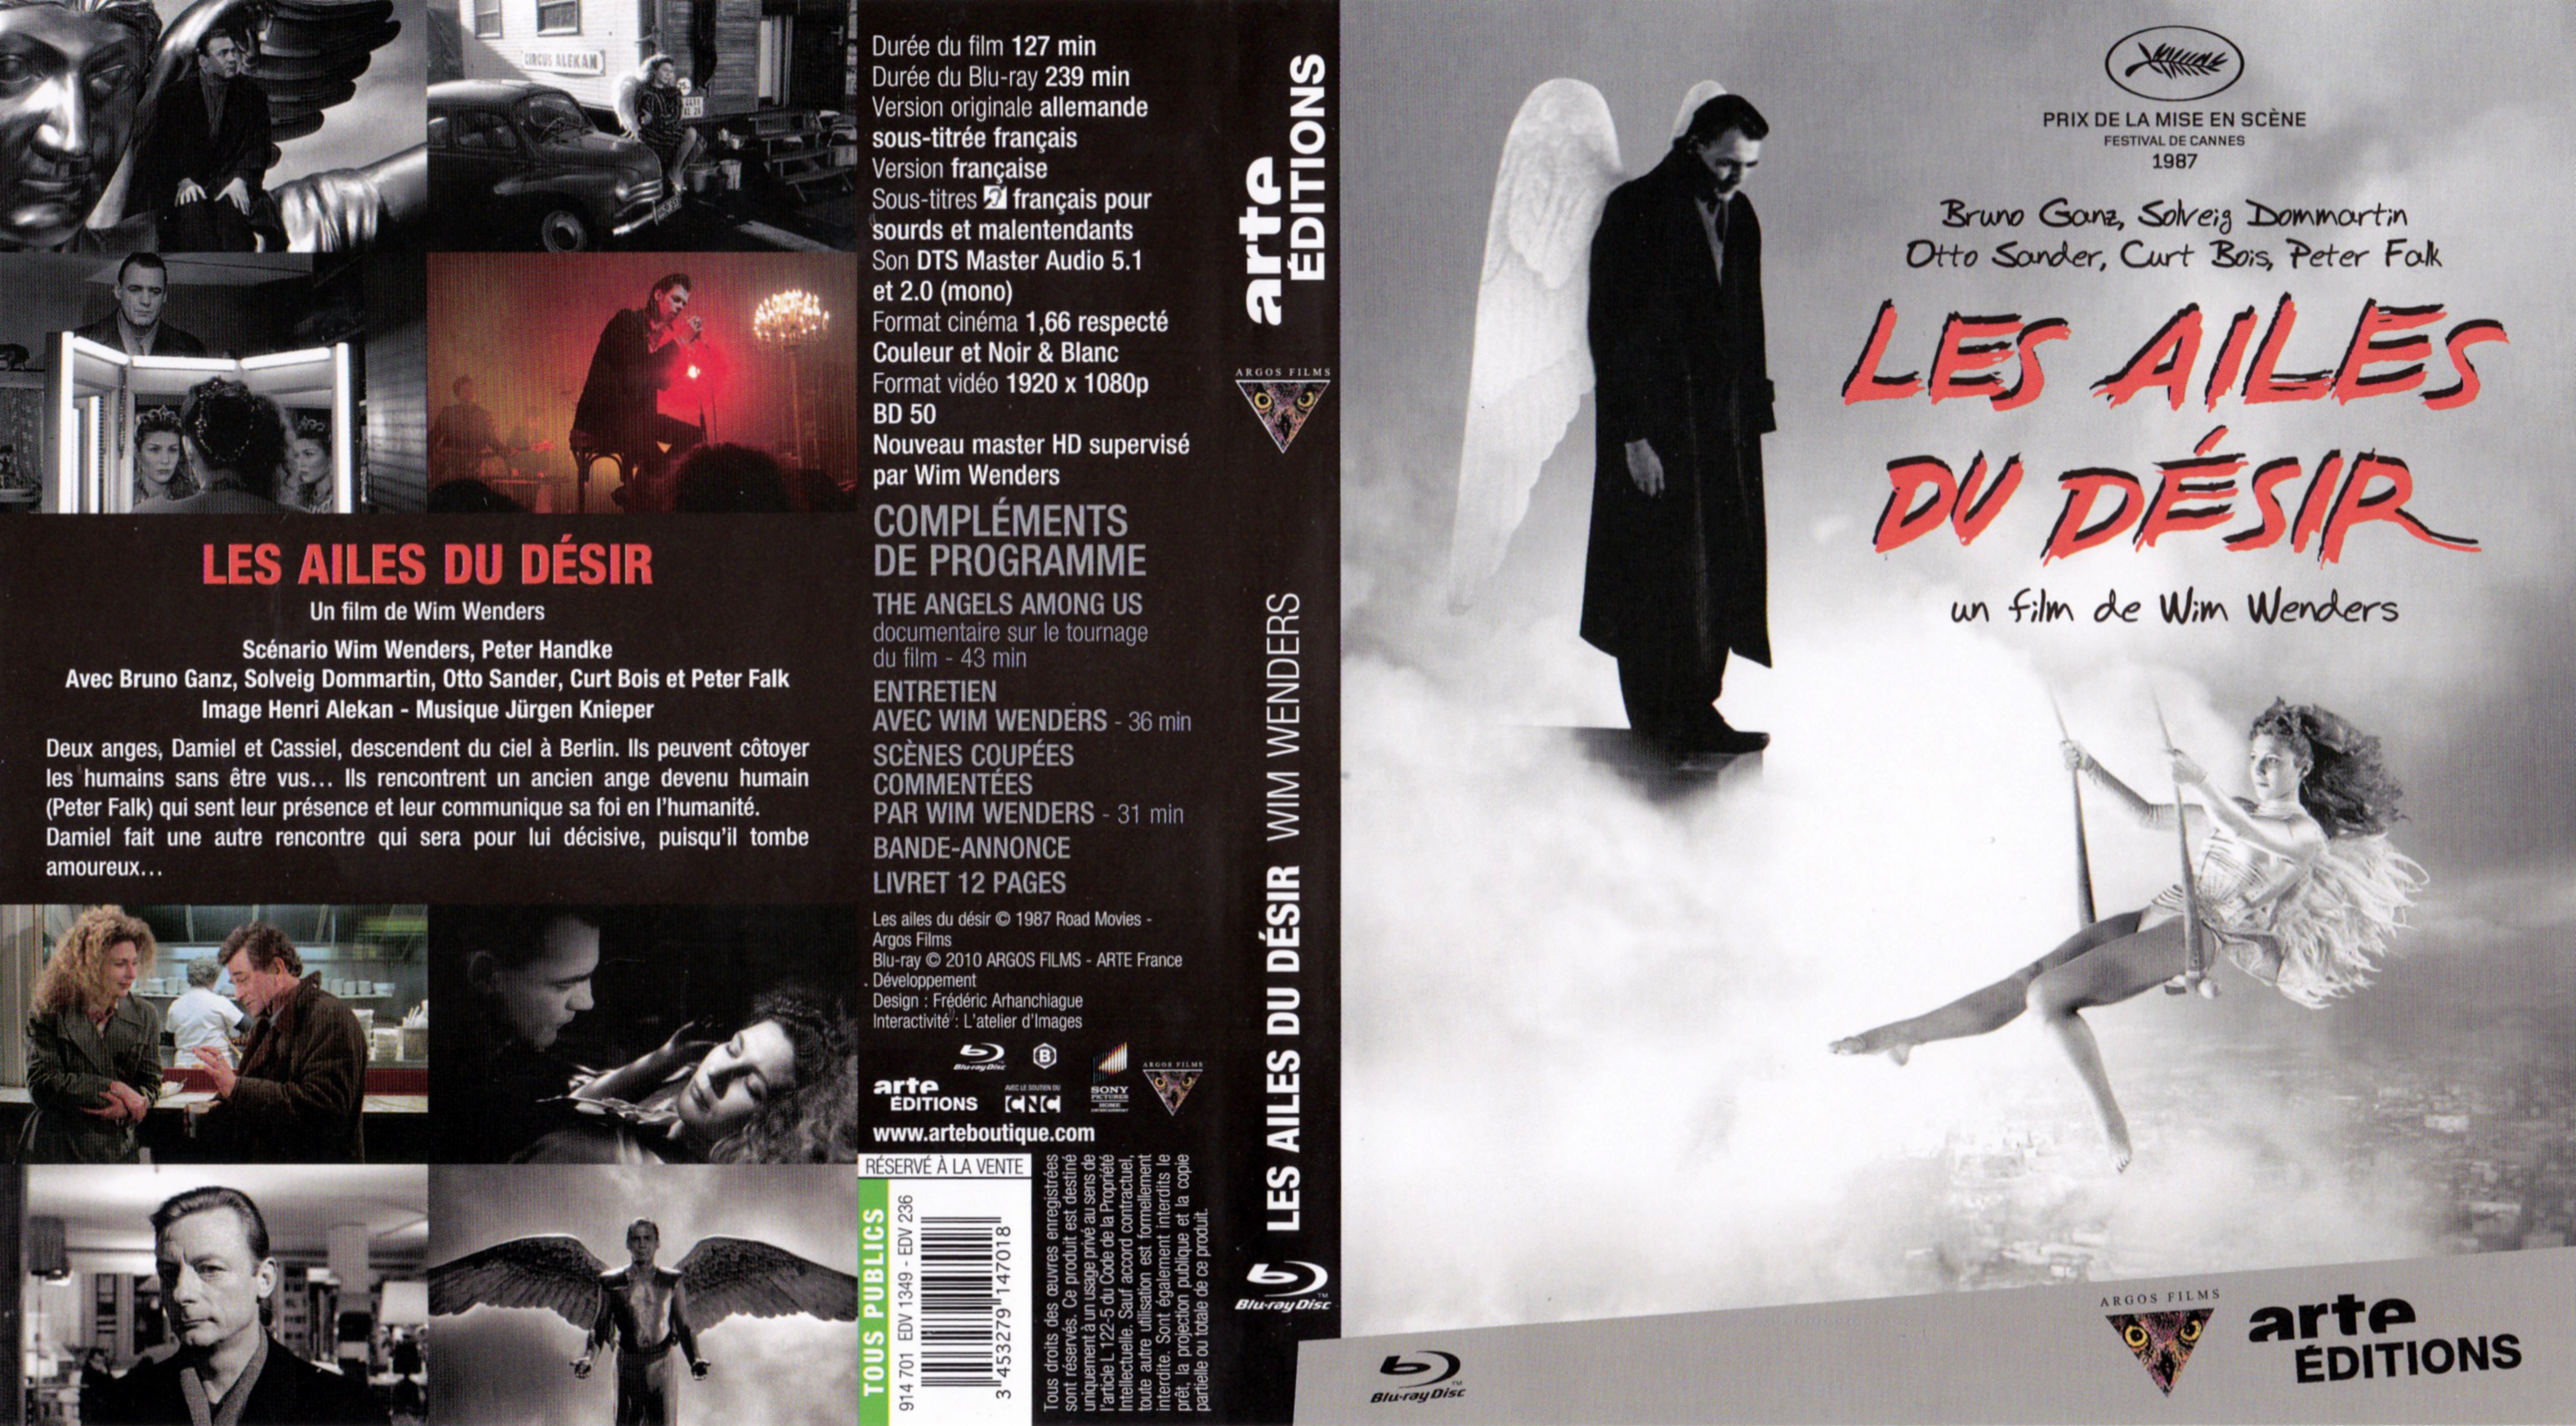 Jaquette DVD Les ailes du dsir (BLU-RAY)